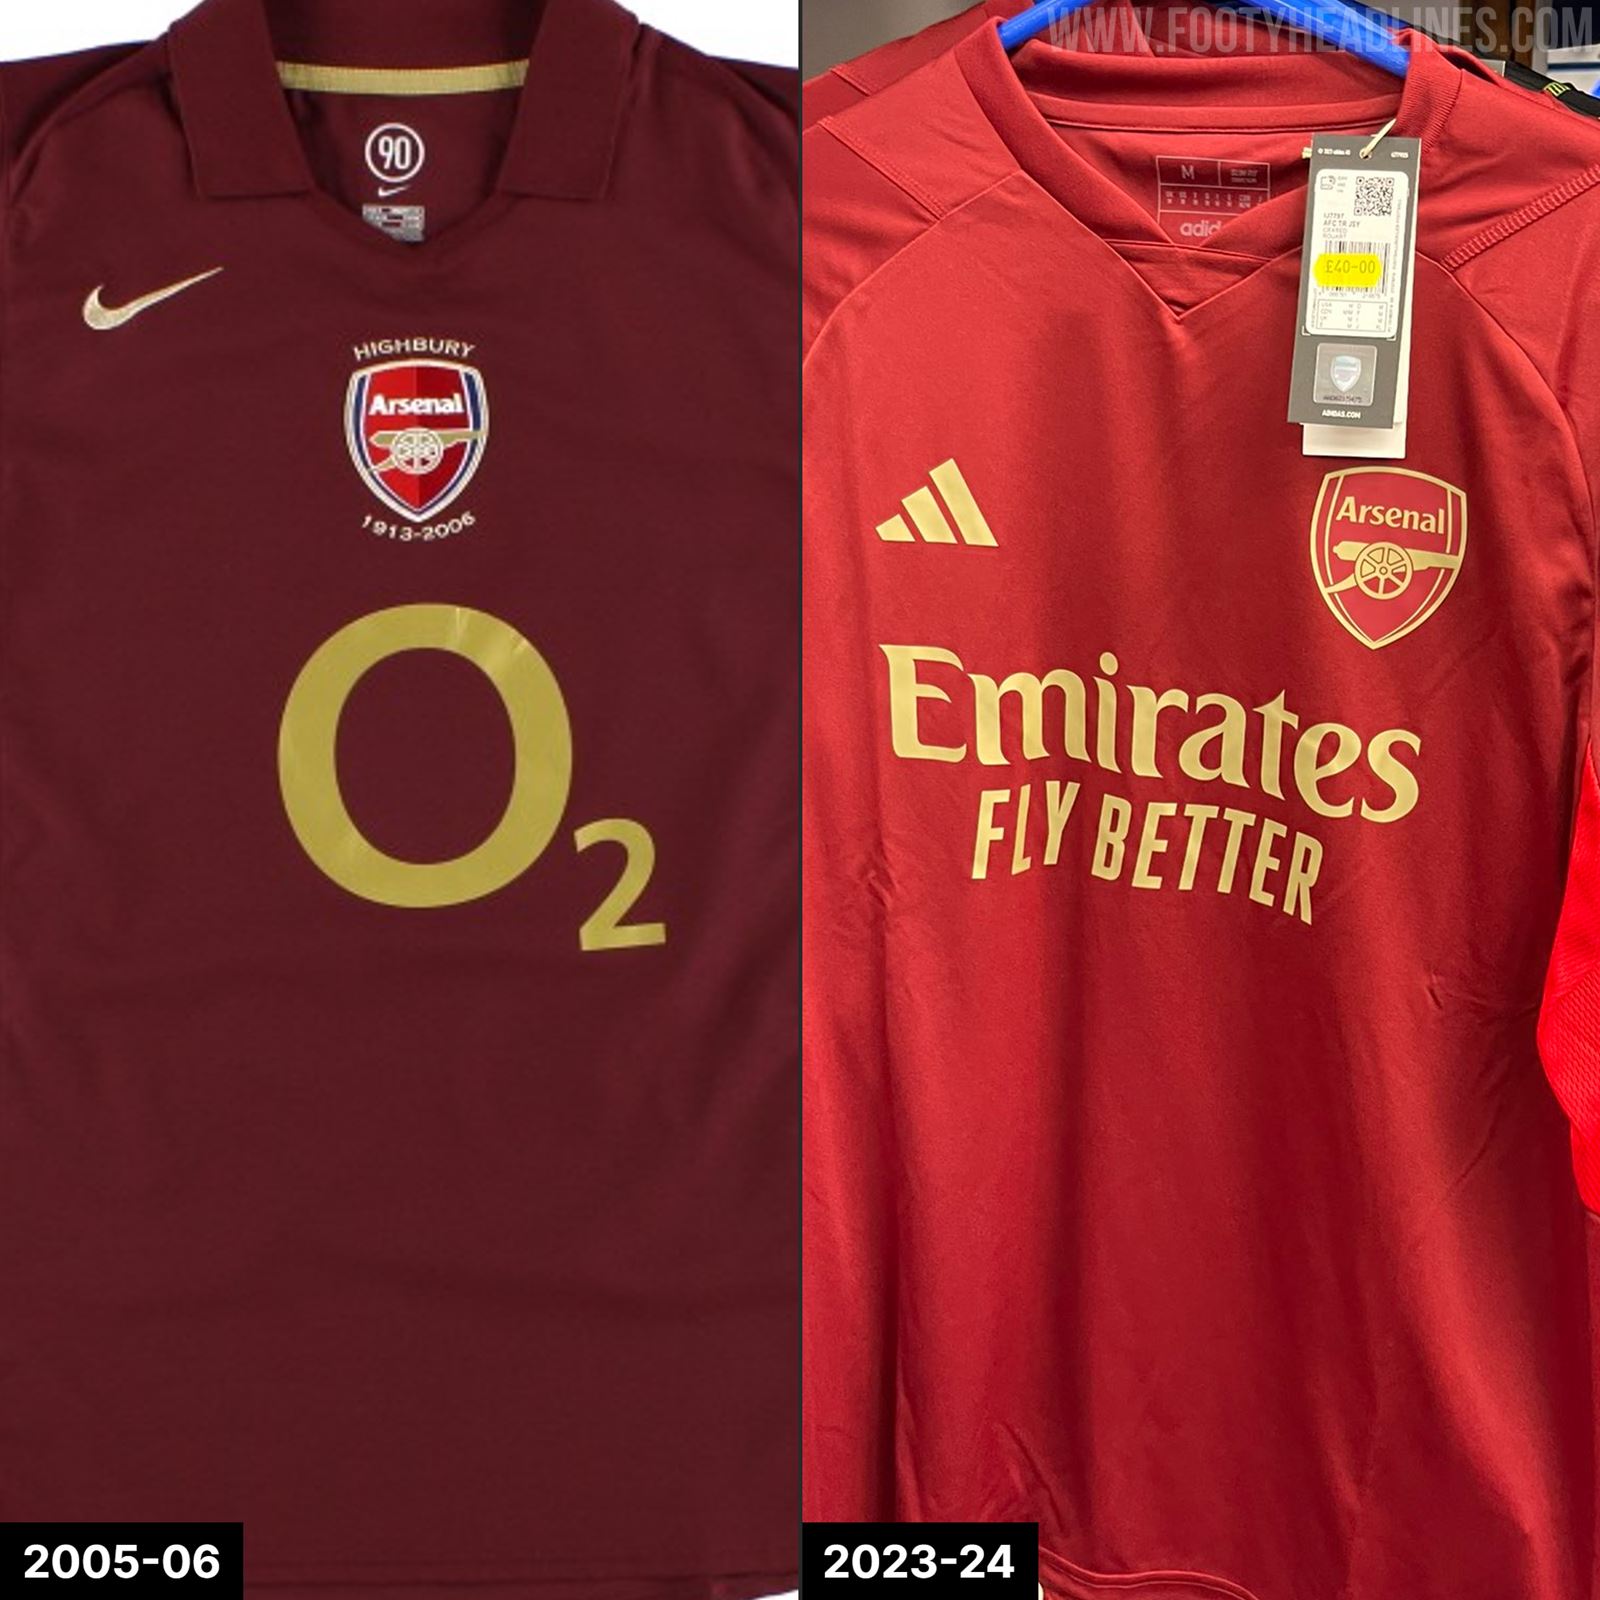 2005-06 Highbury Home Kit Vibes: Maroon/Gold Arsenal 23-24 Training Kit ...